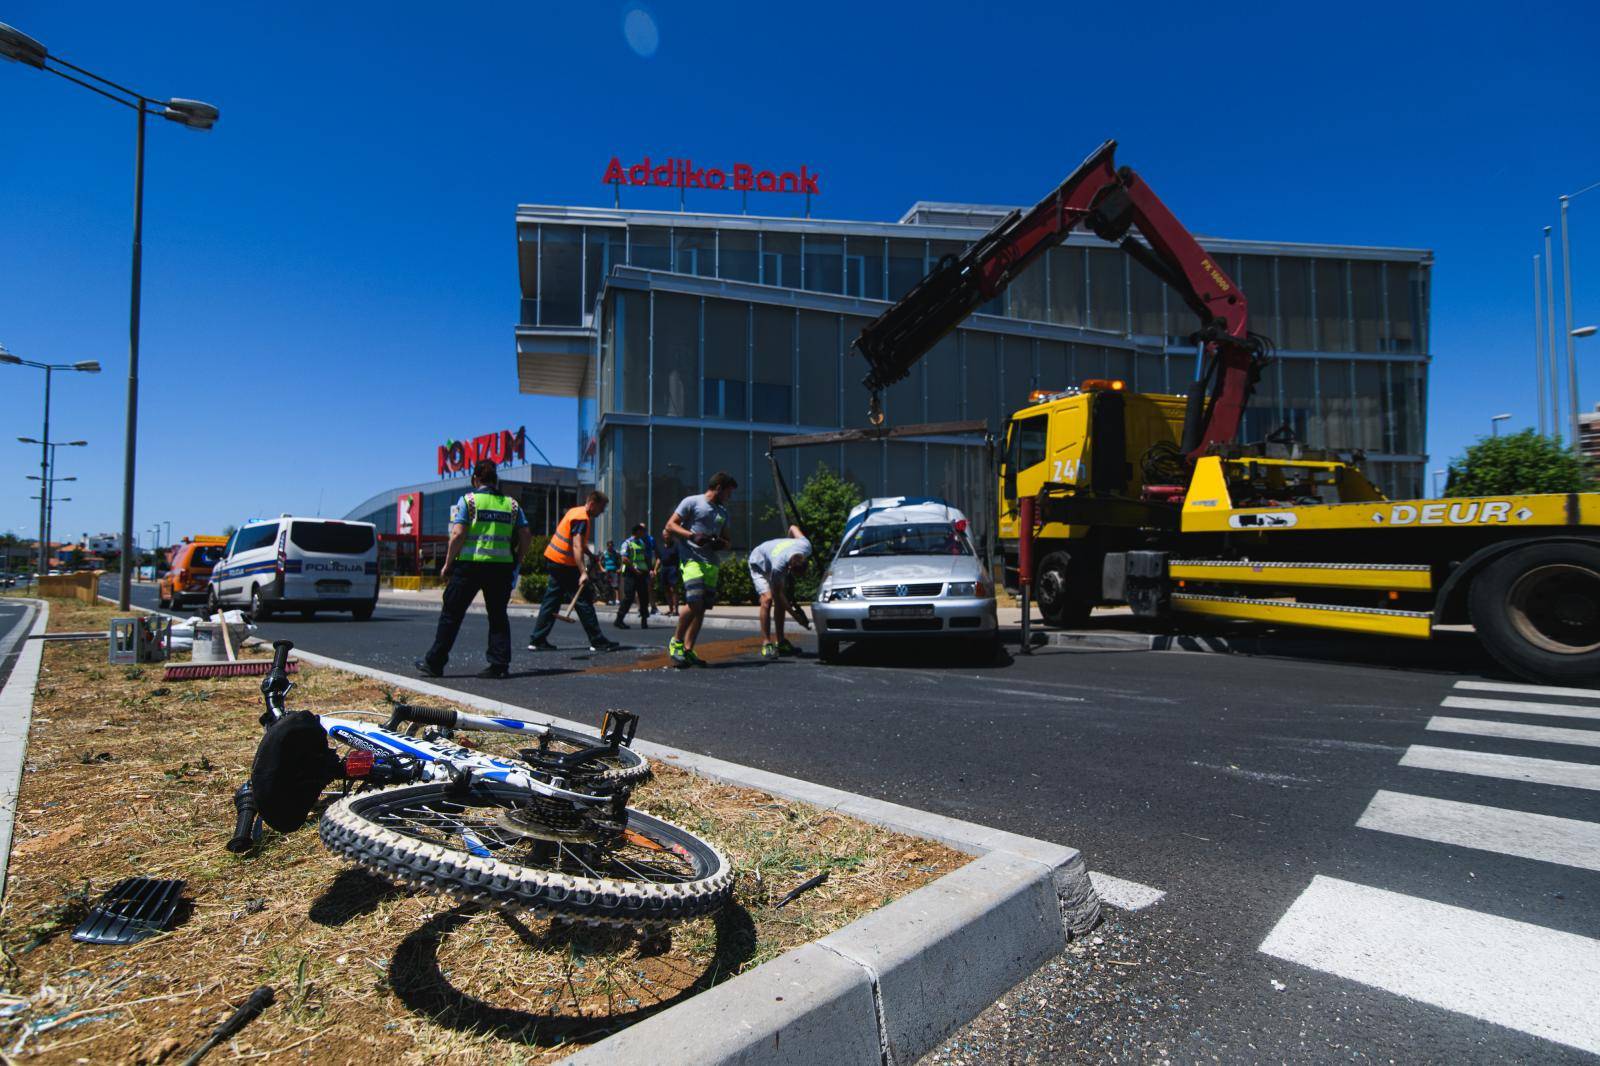 Biciklist teÅ¡ko ozljeÃ°en u prometnoj nesreÃ¦i u Zadru